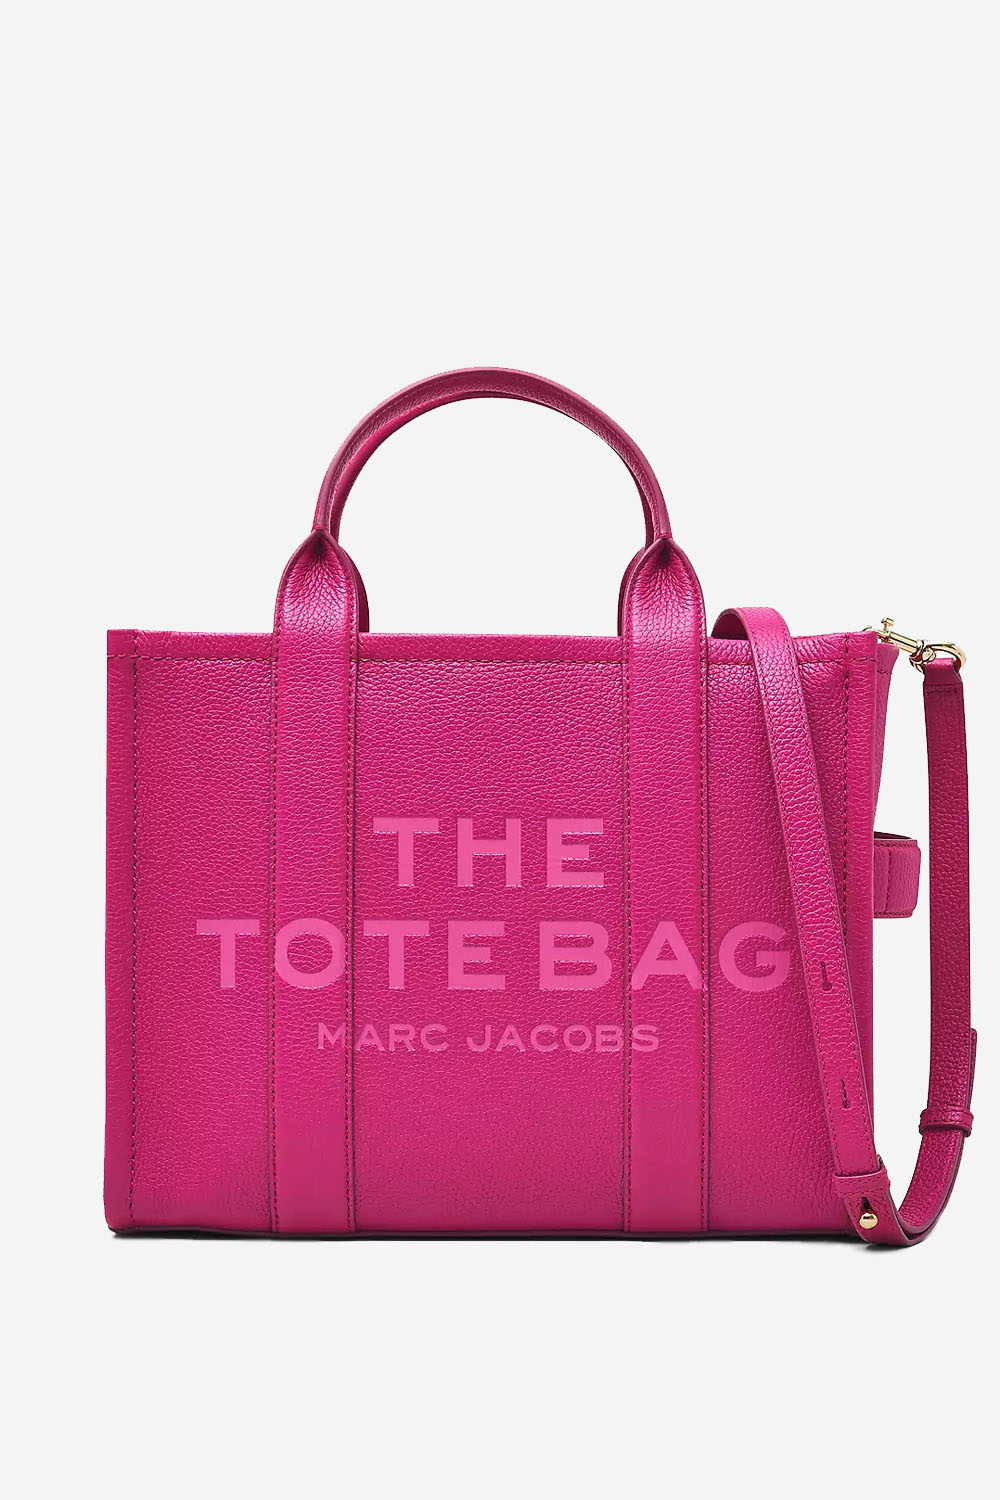 Marc Jacobs Tote bag Pink